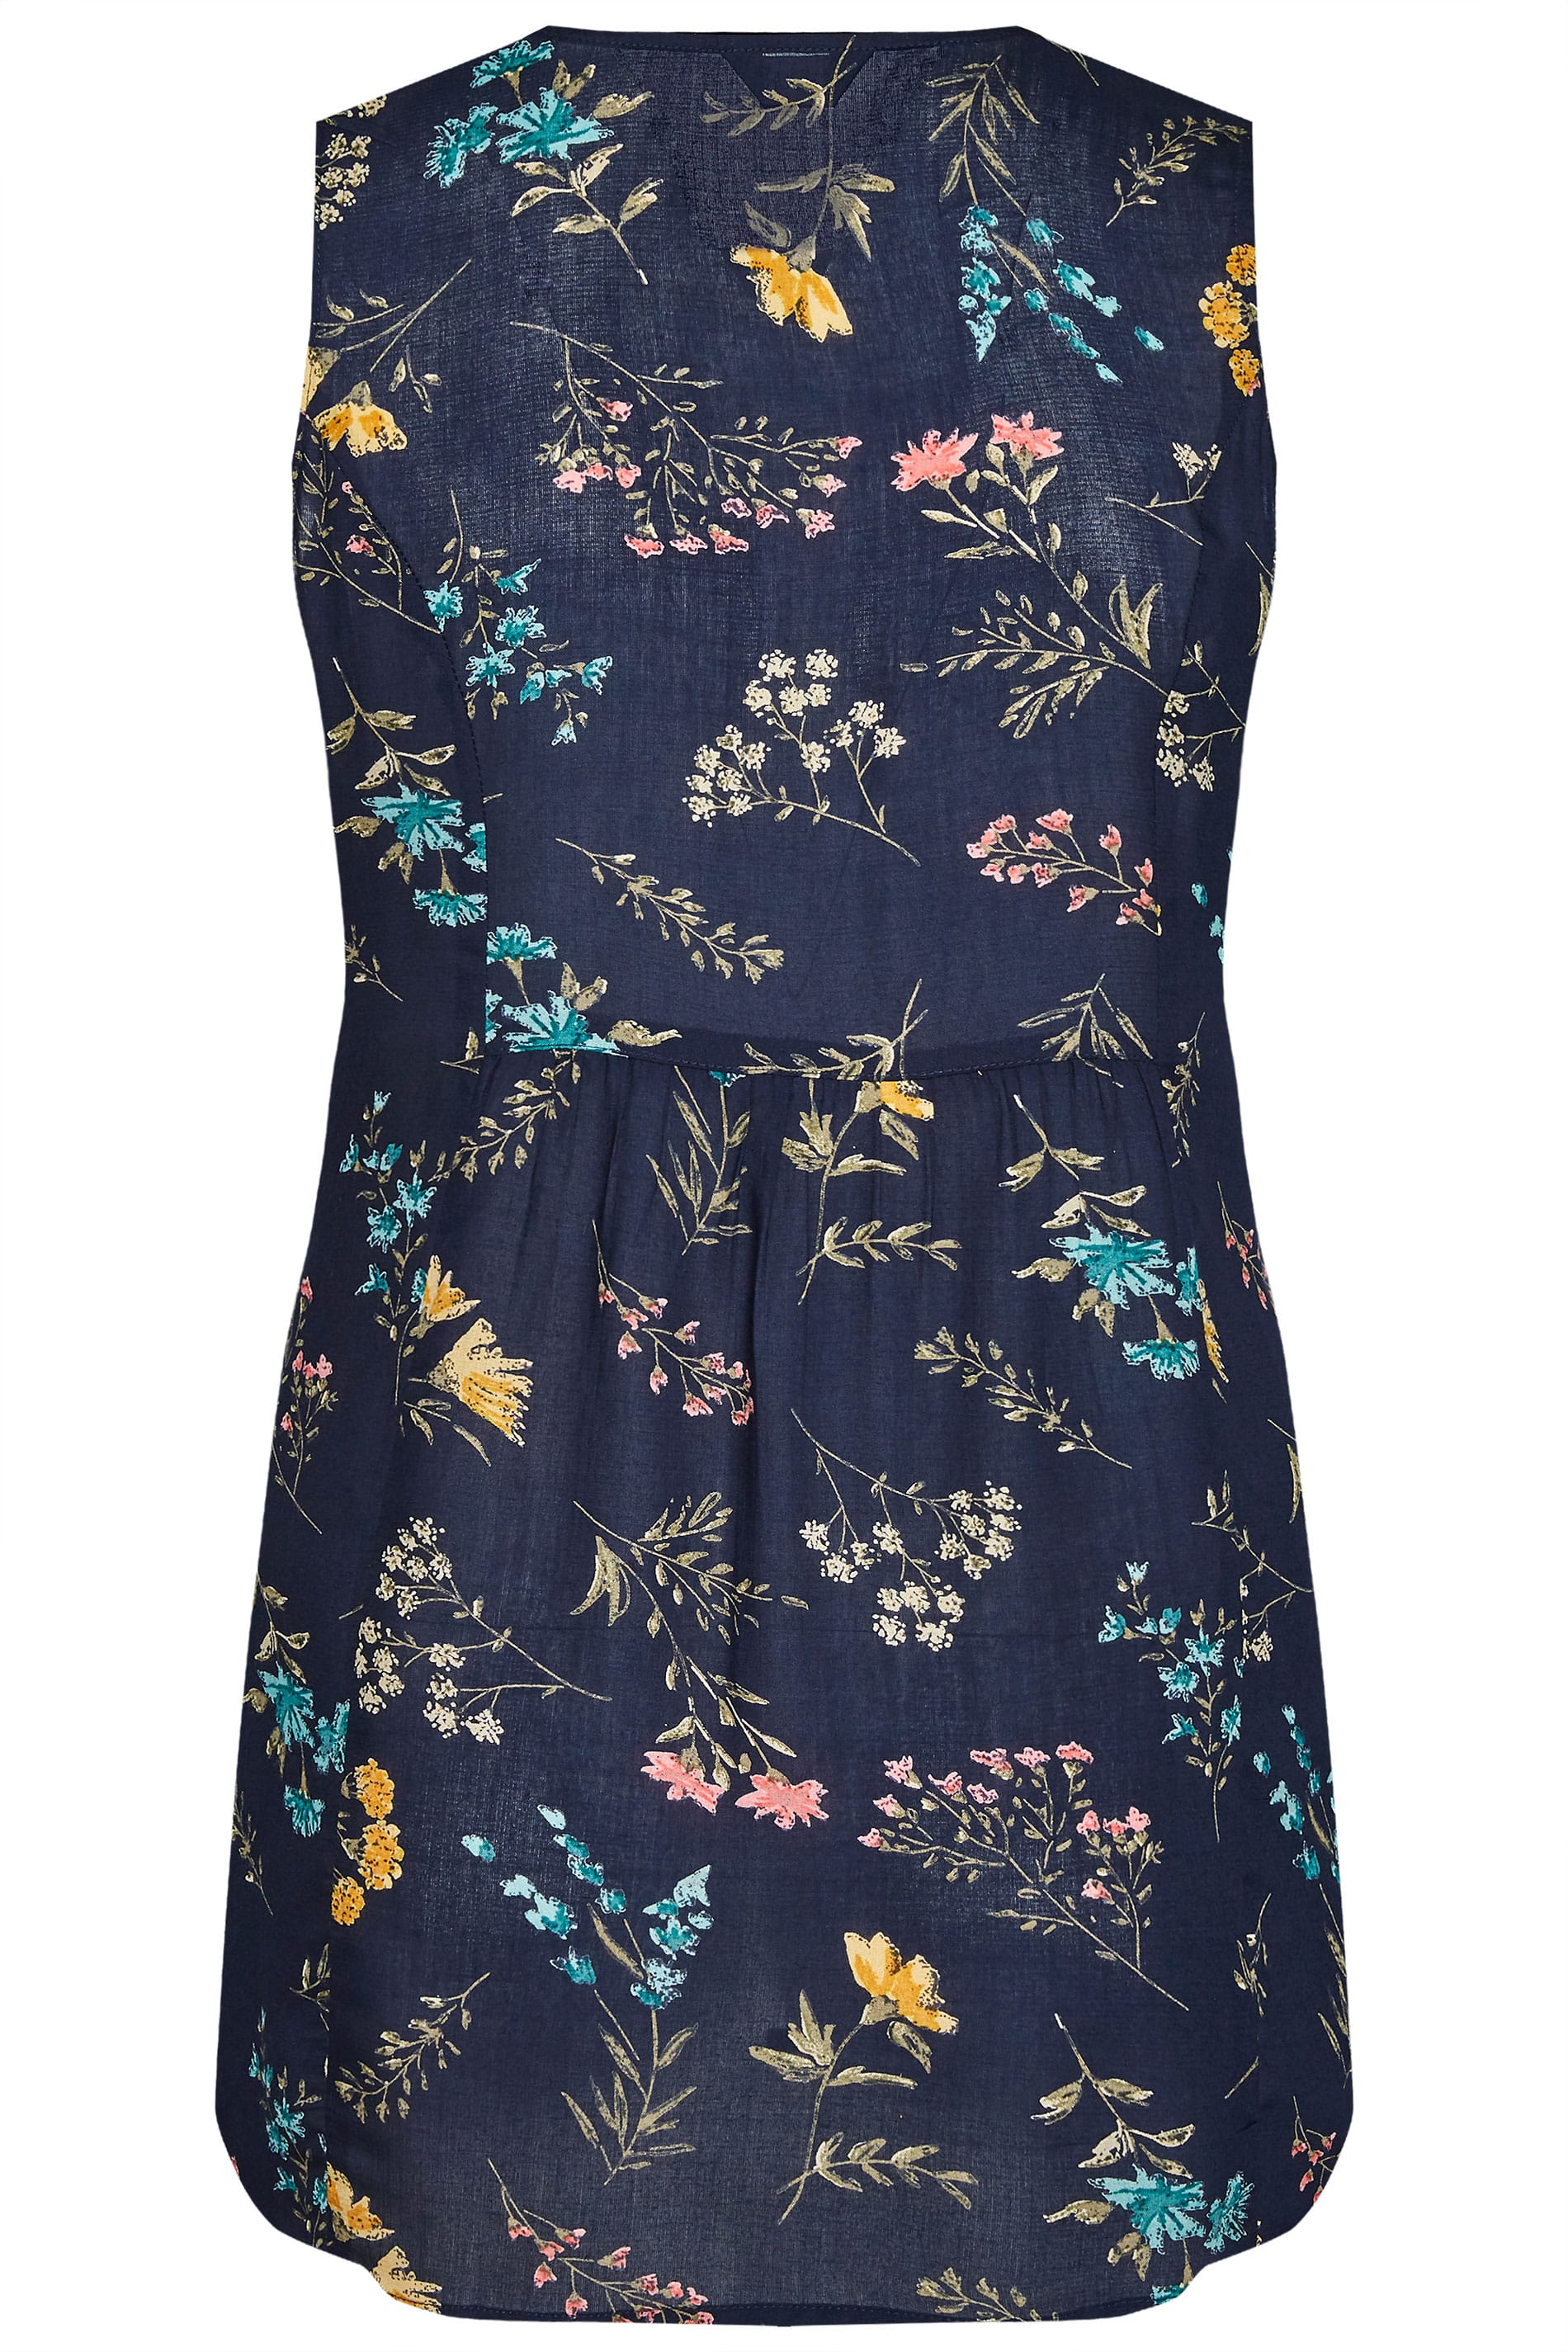 Navy Floral Sleeveless Pocket Blouse | Sizes 16-40 | Yours Clothing